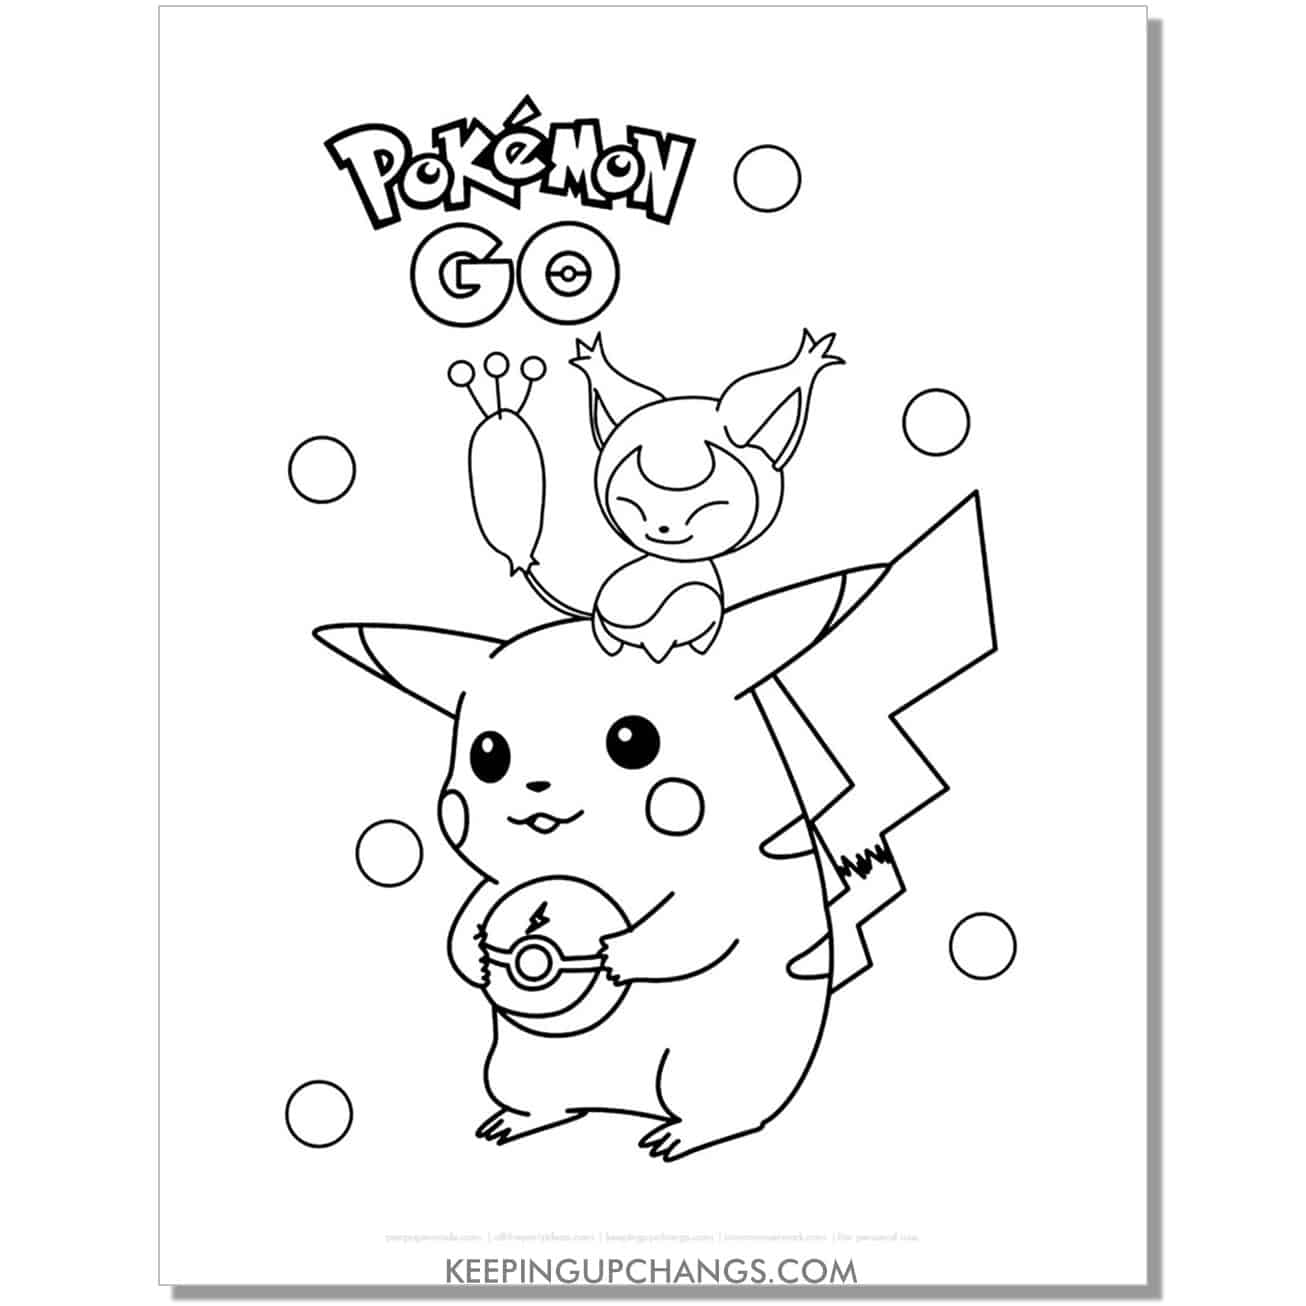 pikachu, skitty pokemon go coloring page, sheet.